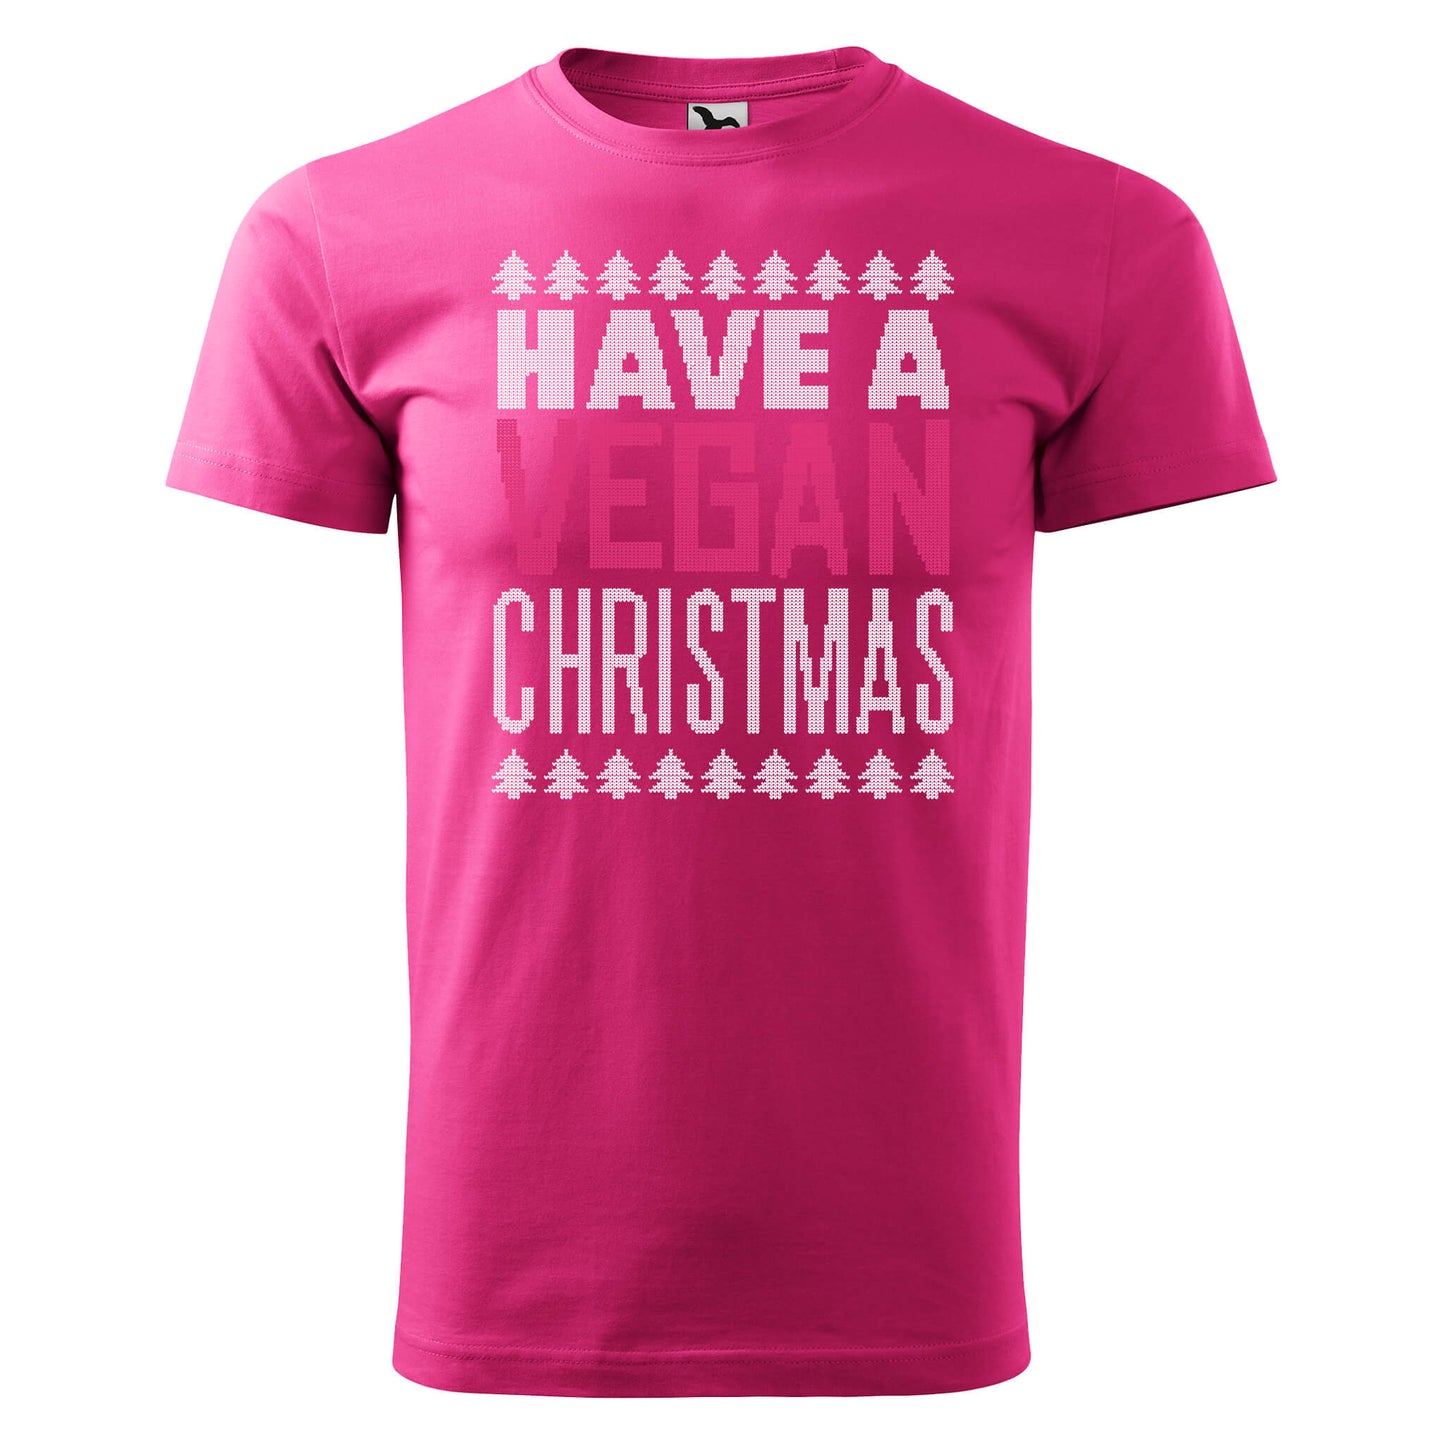 Have a vegan christmas t-shirt - rvdesignprint